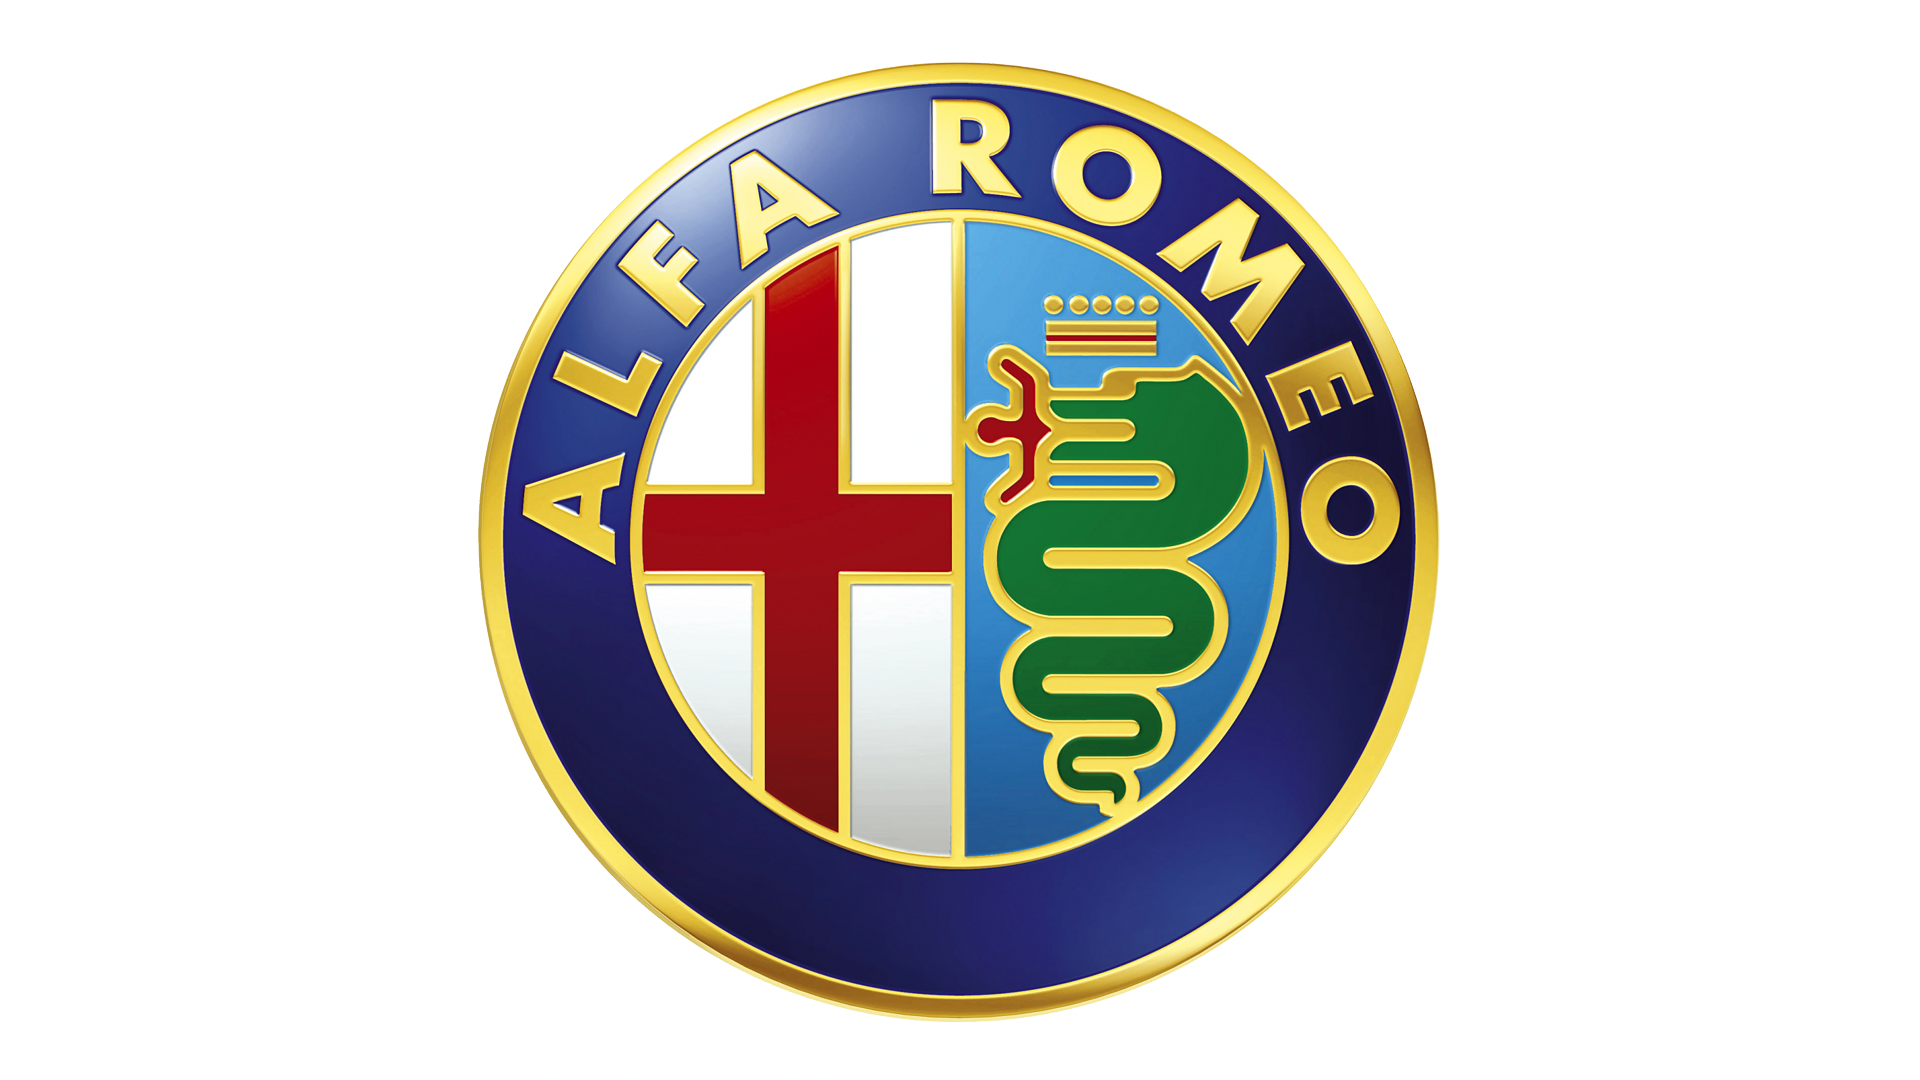 Альфа без ромео. Alfa Romeo значок. Альфа Ромео логотип. Альфа Ромео значок старый. Логотип Альфа Рамэ.